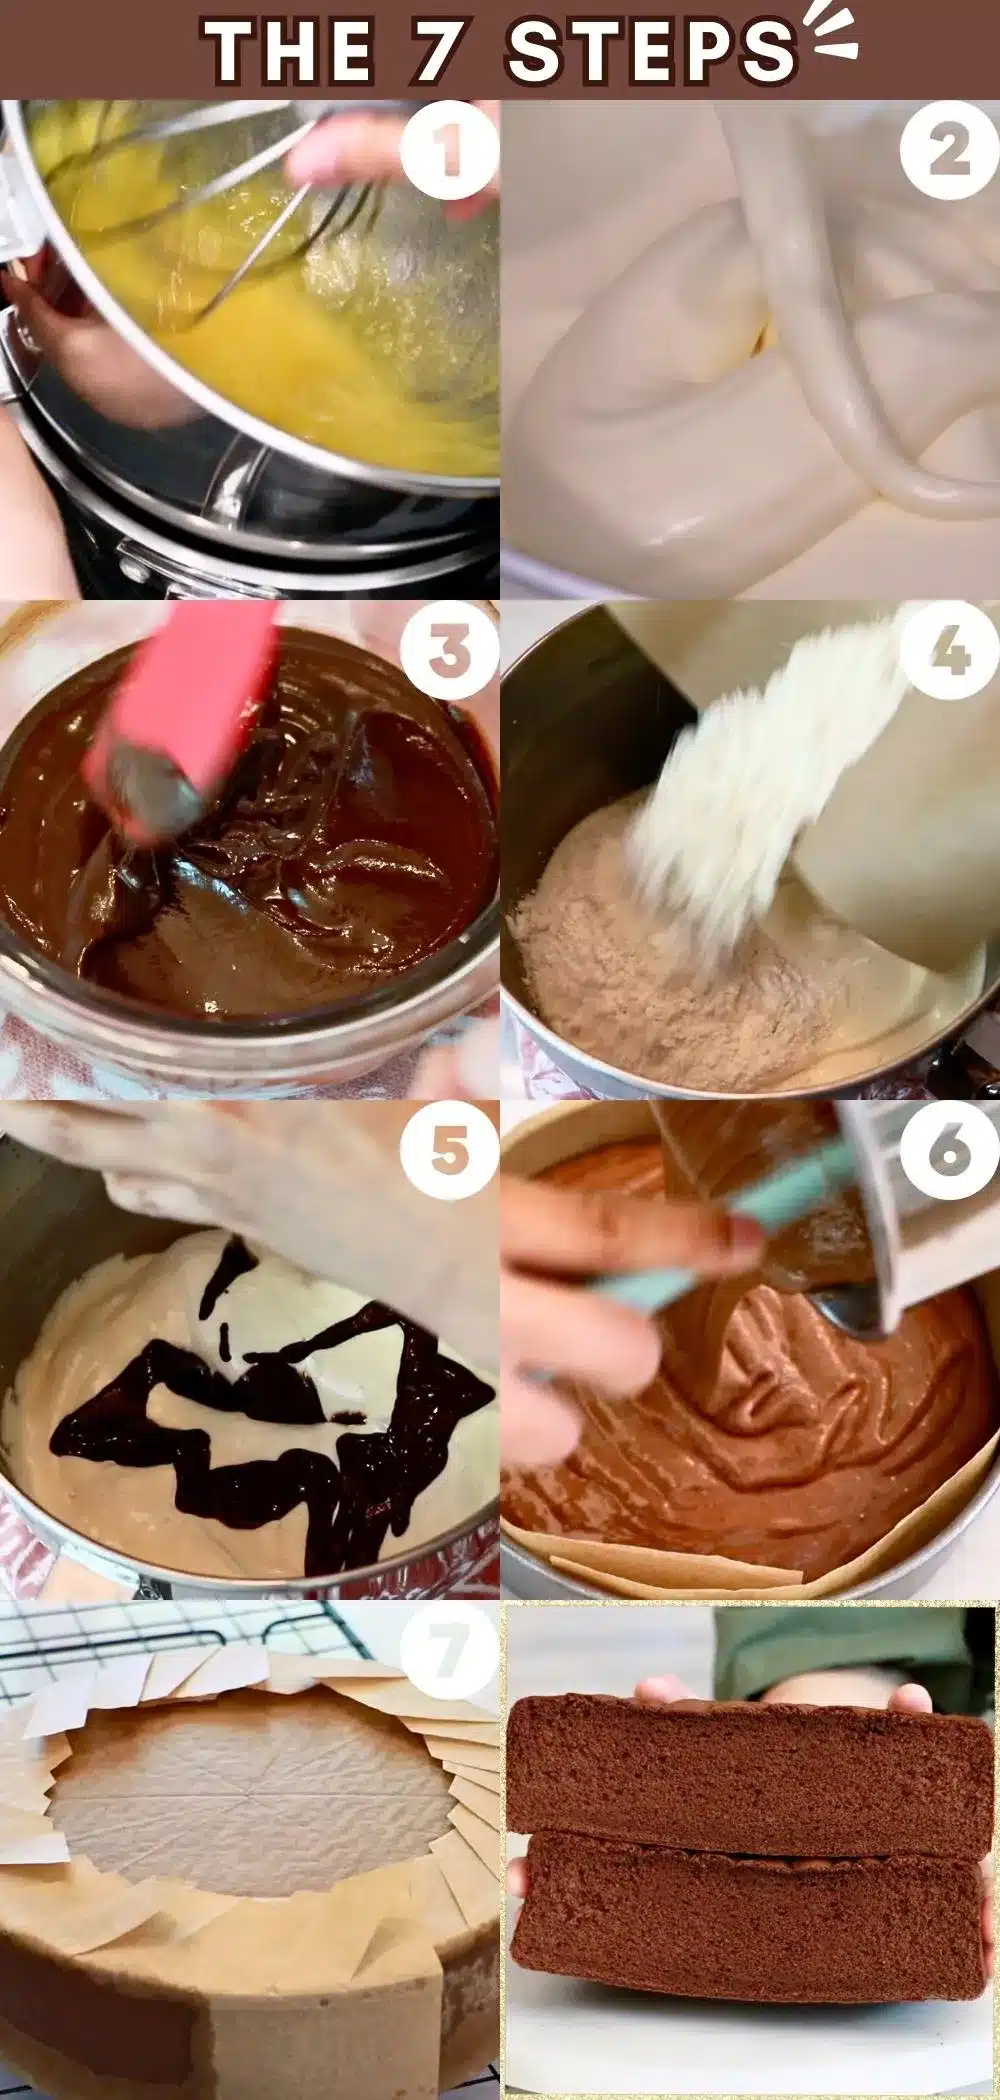 7 steps to make chocolate sponge cake